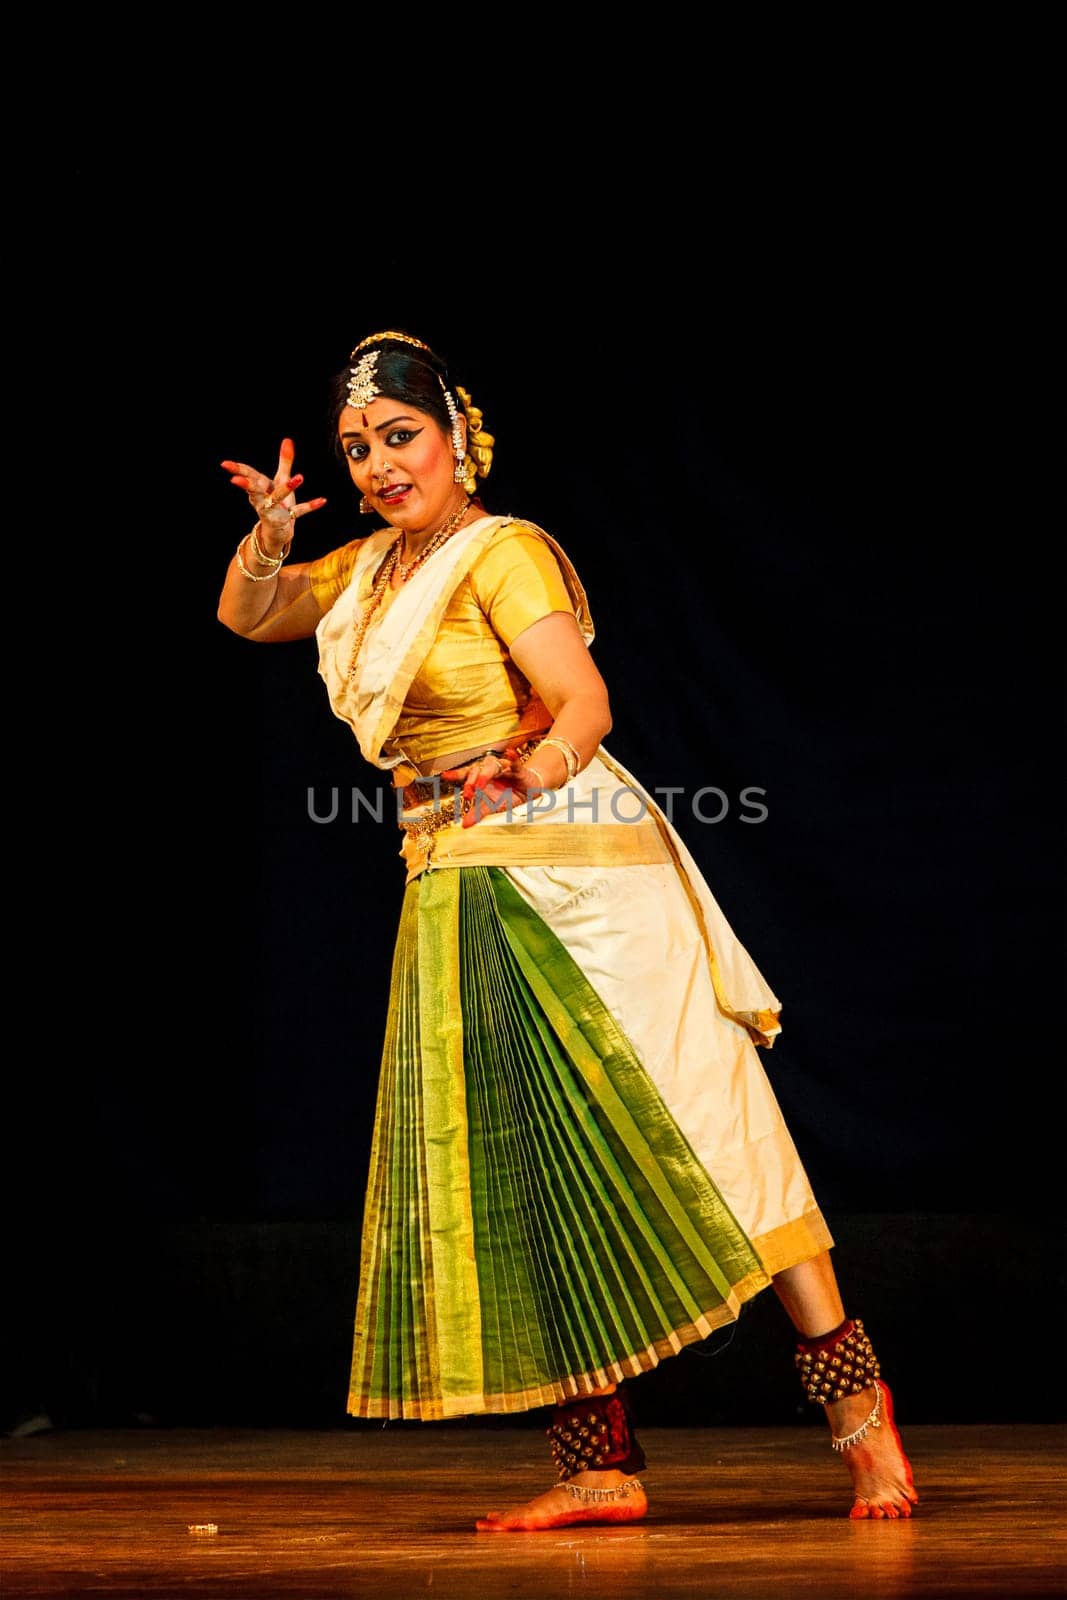 Bharatanatyam - classical Indian dance by dimol